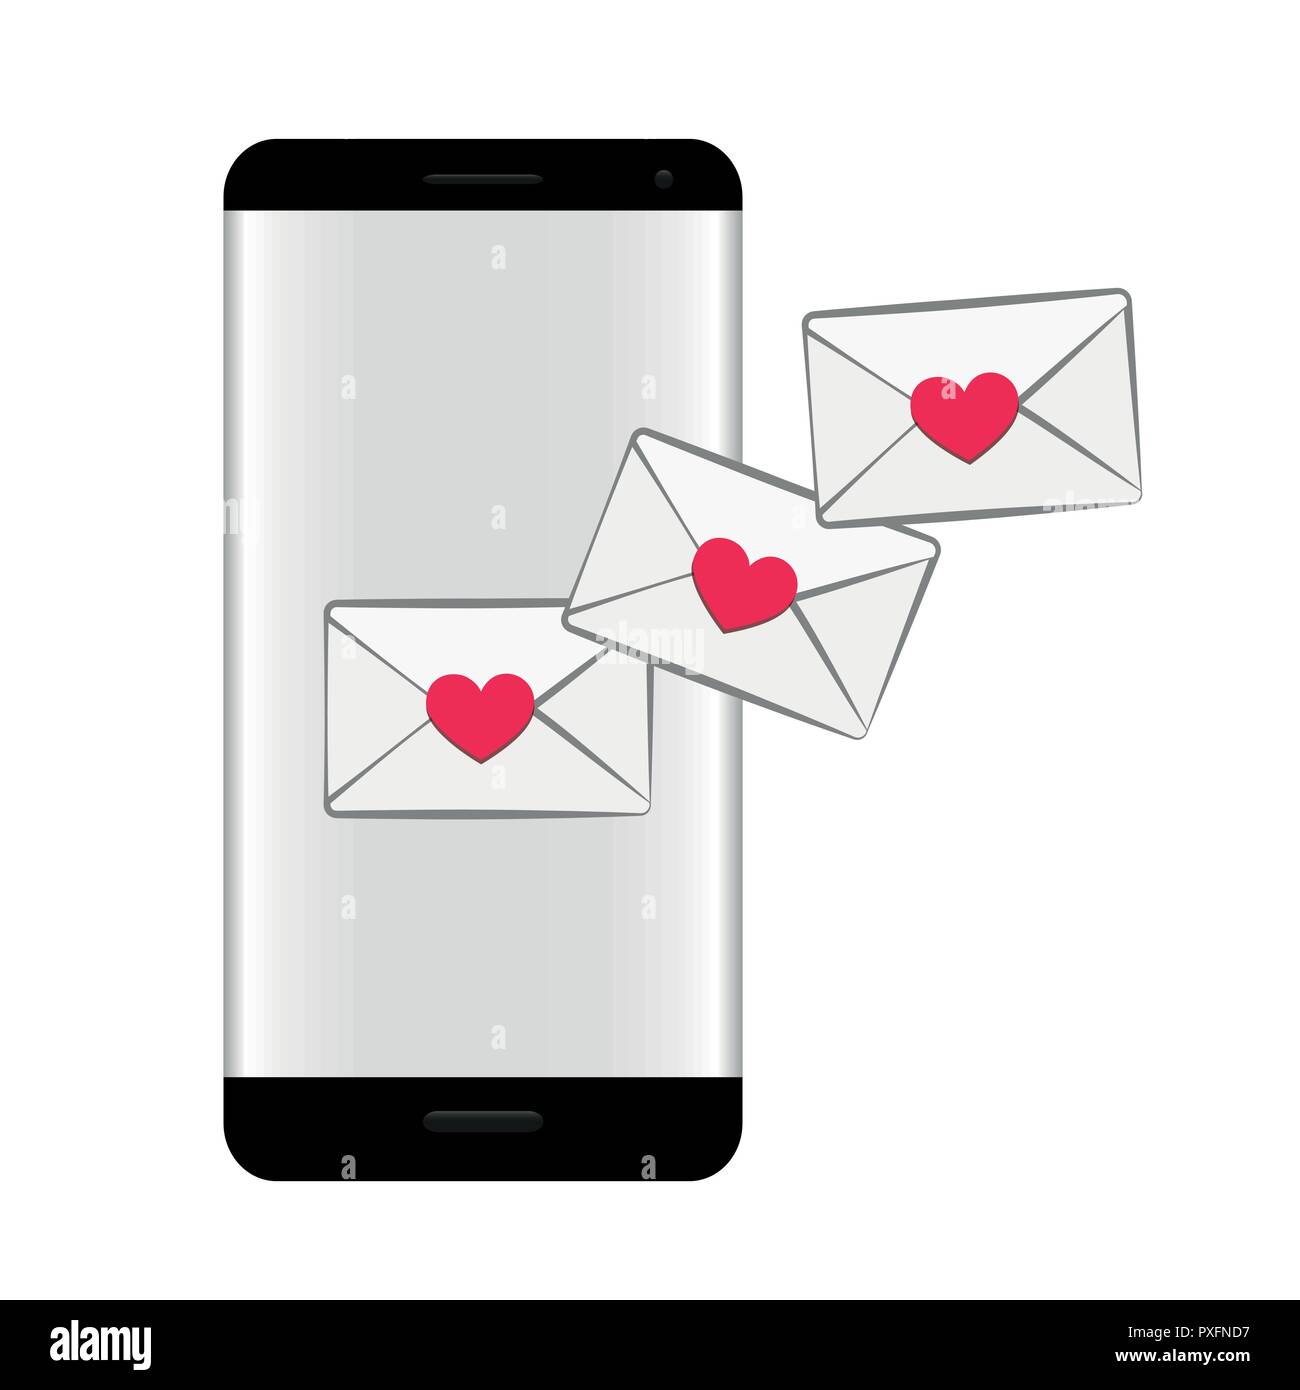 Smartphone mit love message on-line Konzept Vektor-illustration EPS 10. Stock Vektor